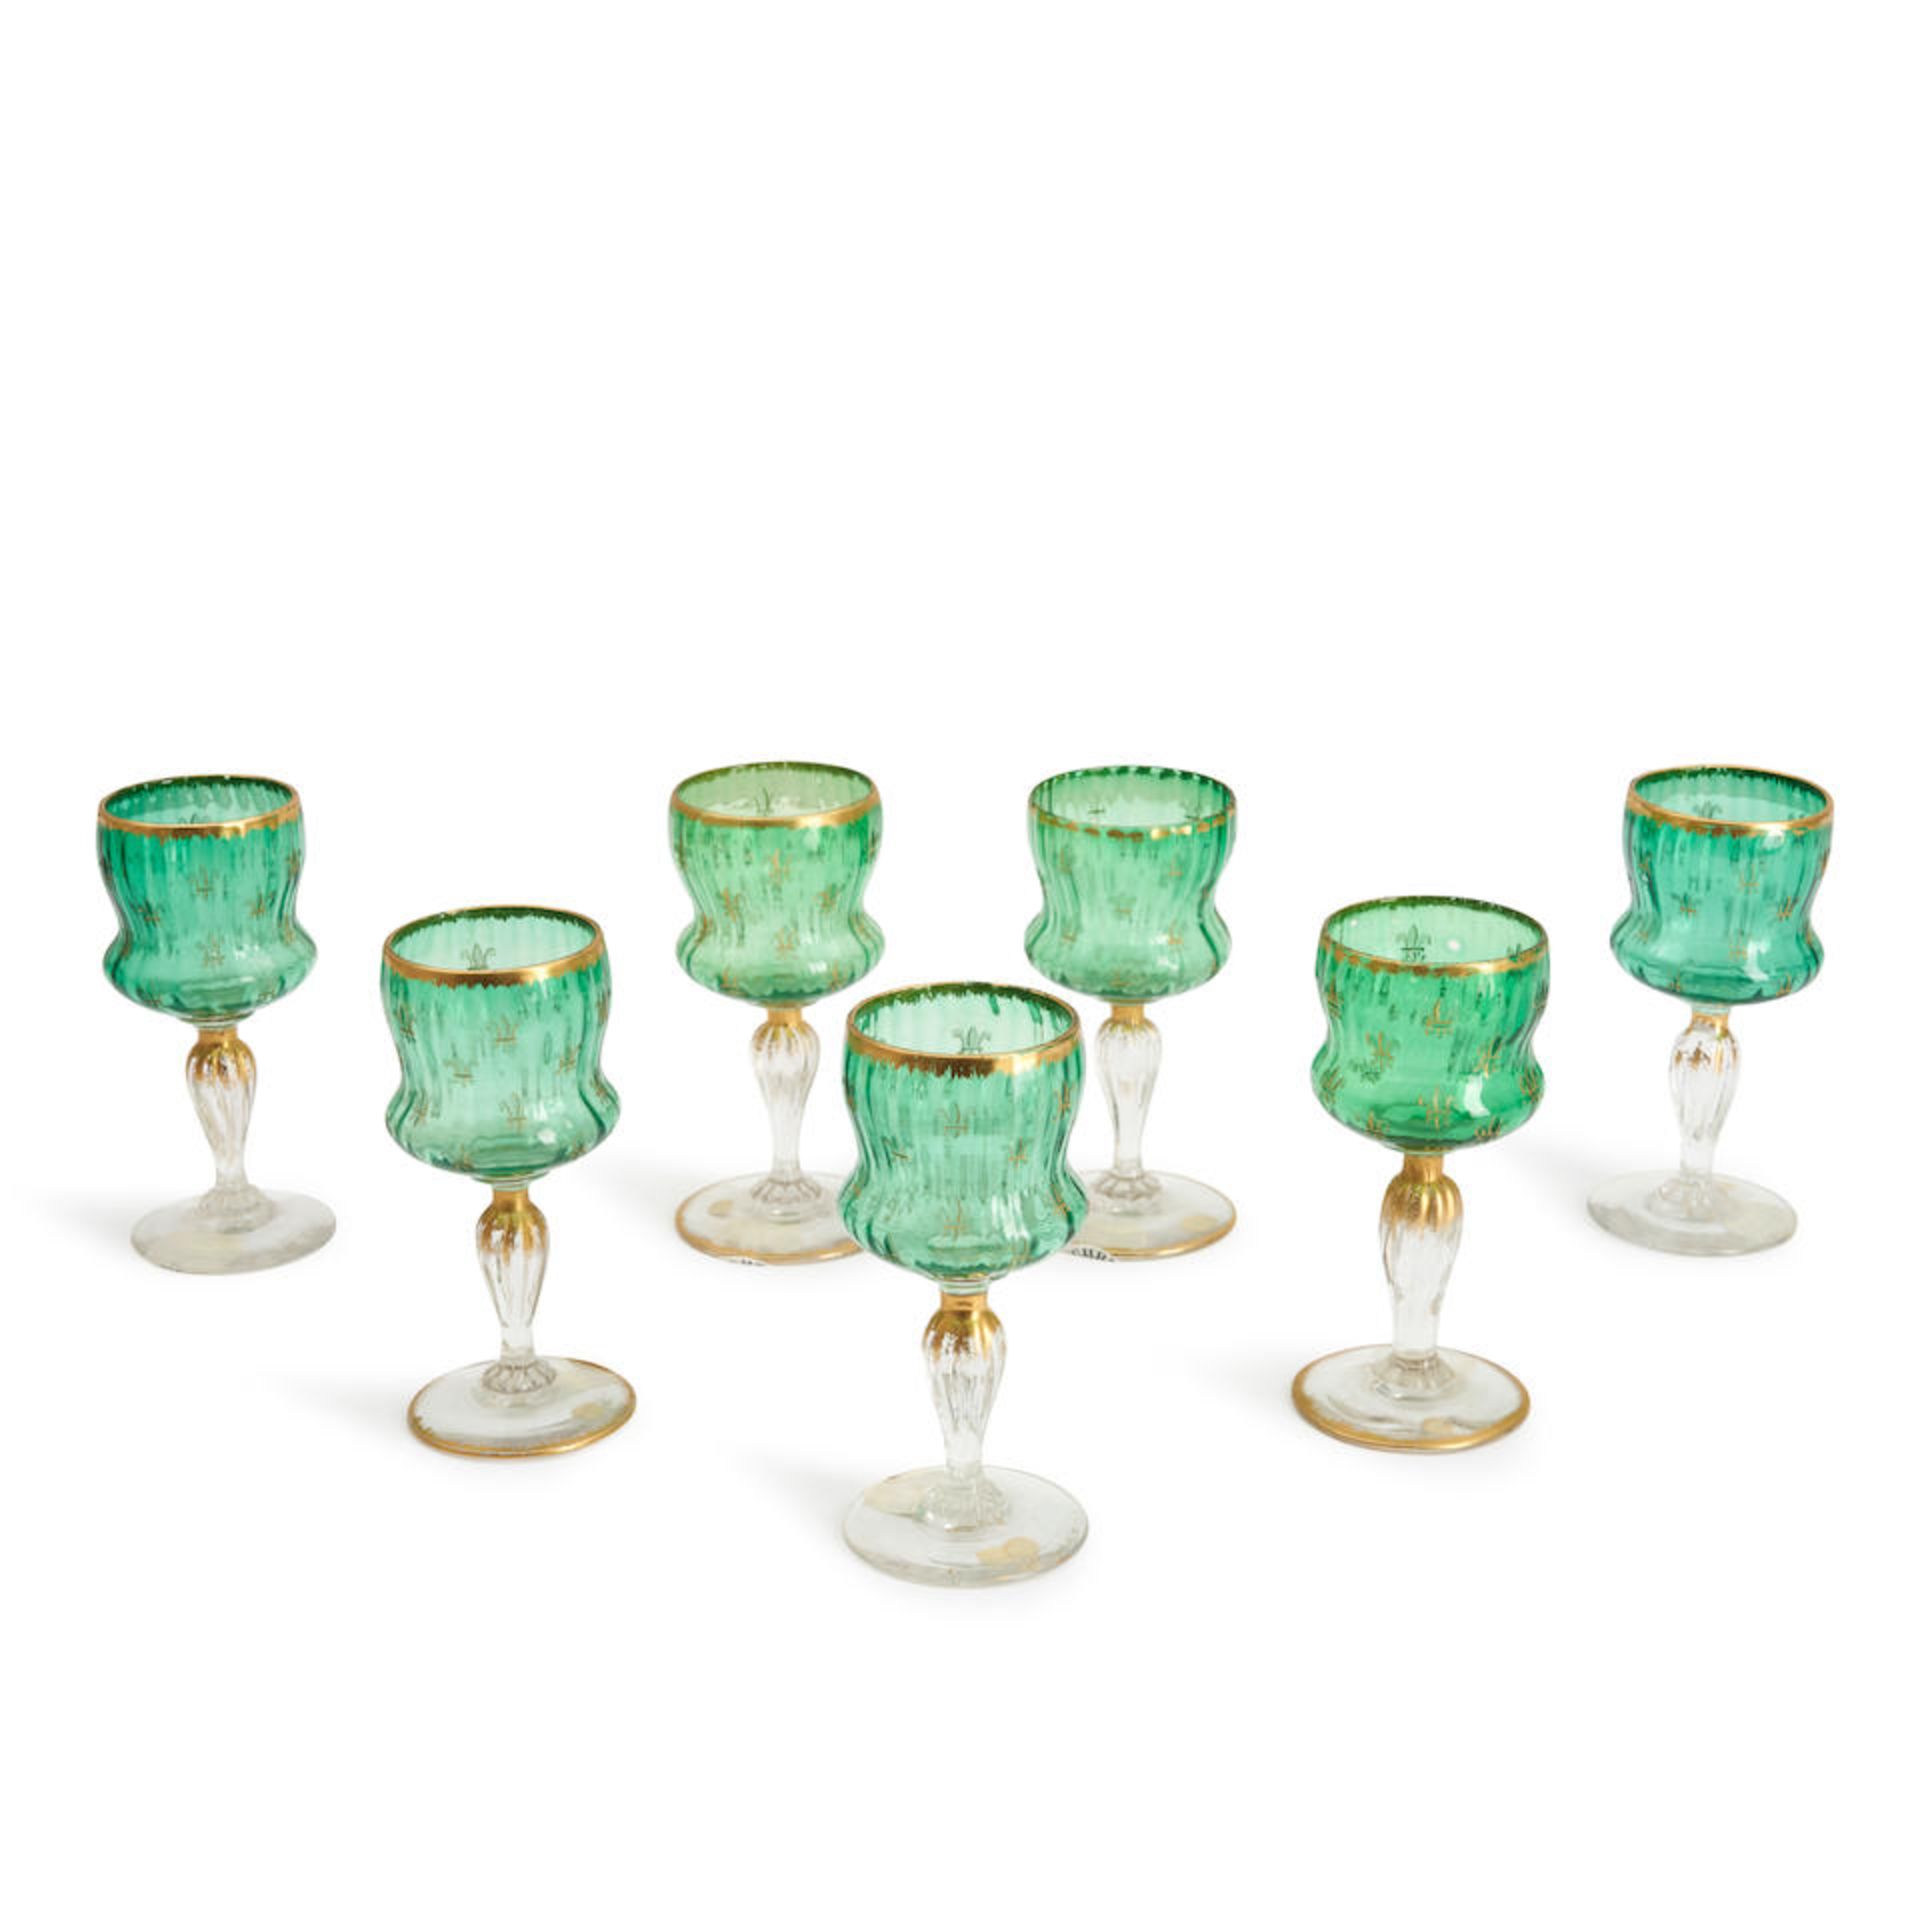 SEVEN DAUM ENGRAVED AND GILT GLASS CORDIAL GLASSES, Nancy, France, c. 1895, gilt paint mark 'Dau...